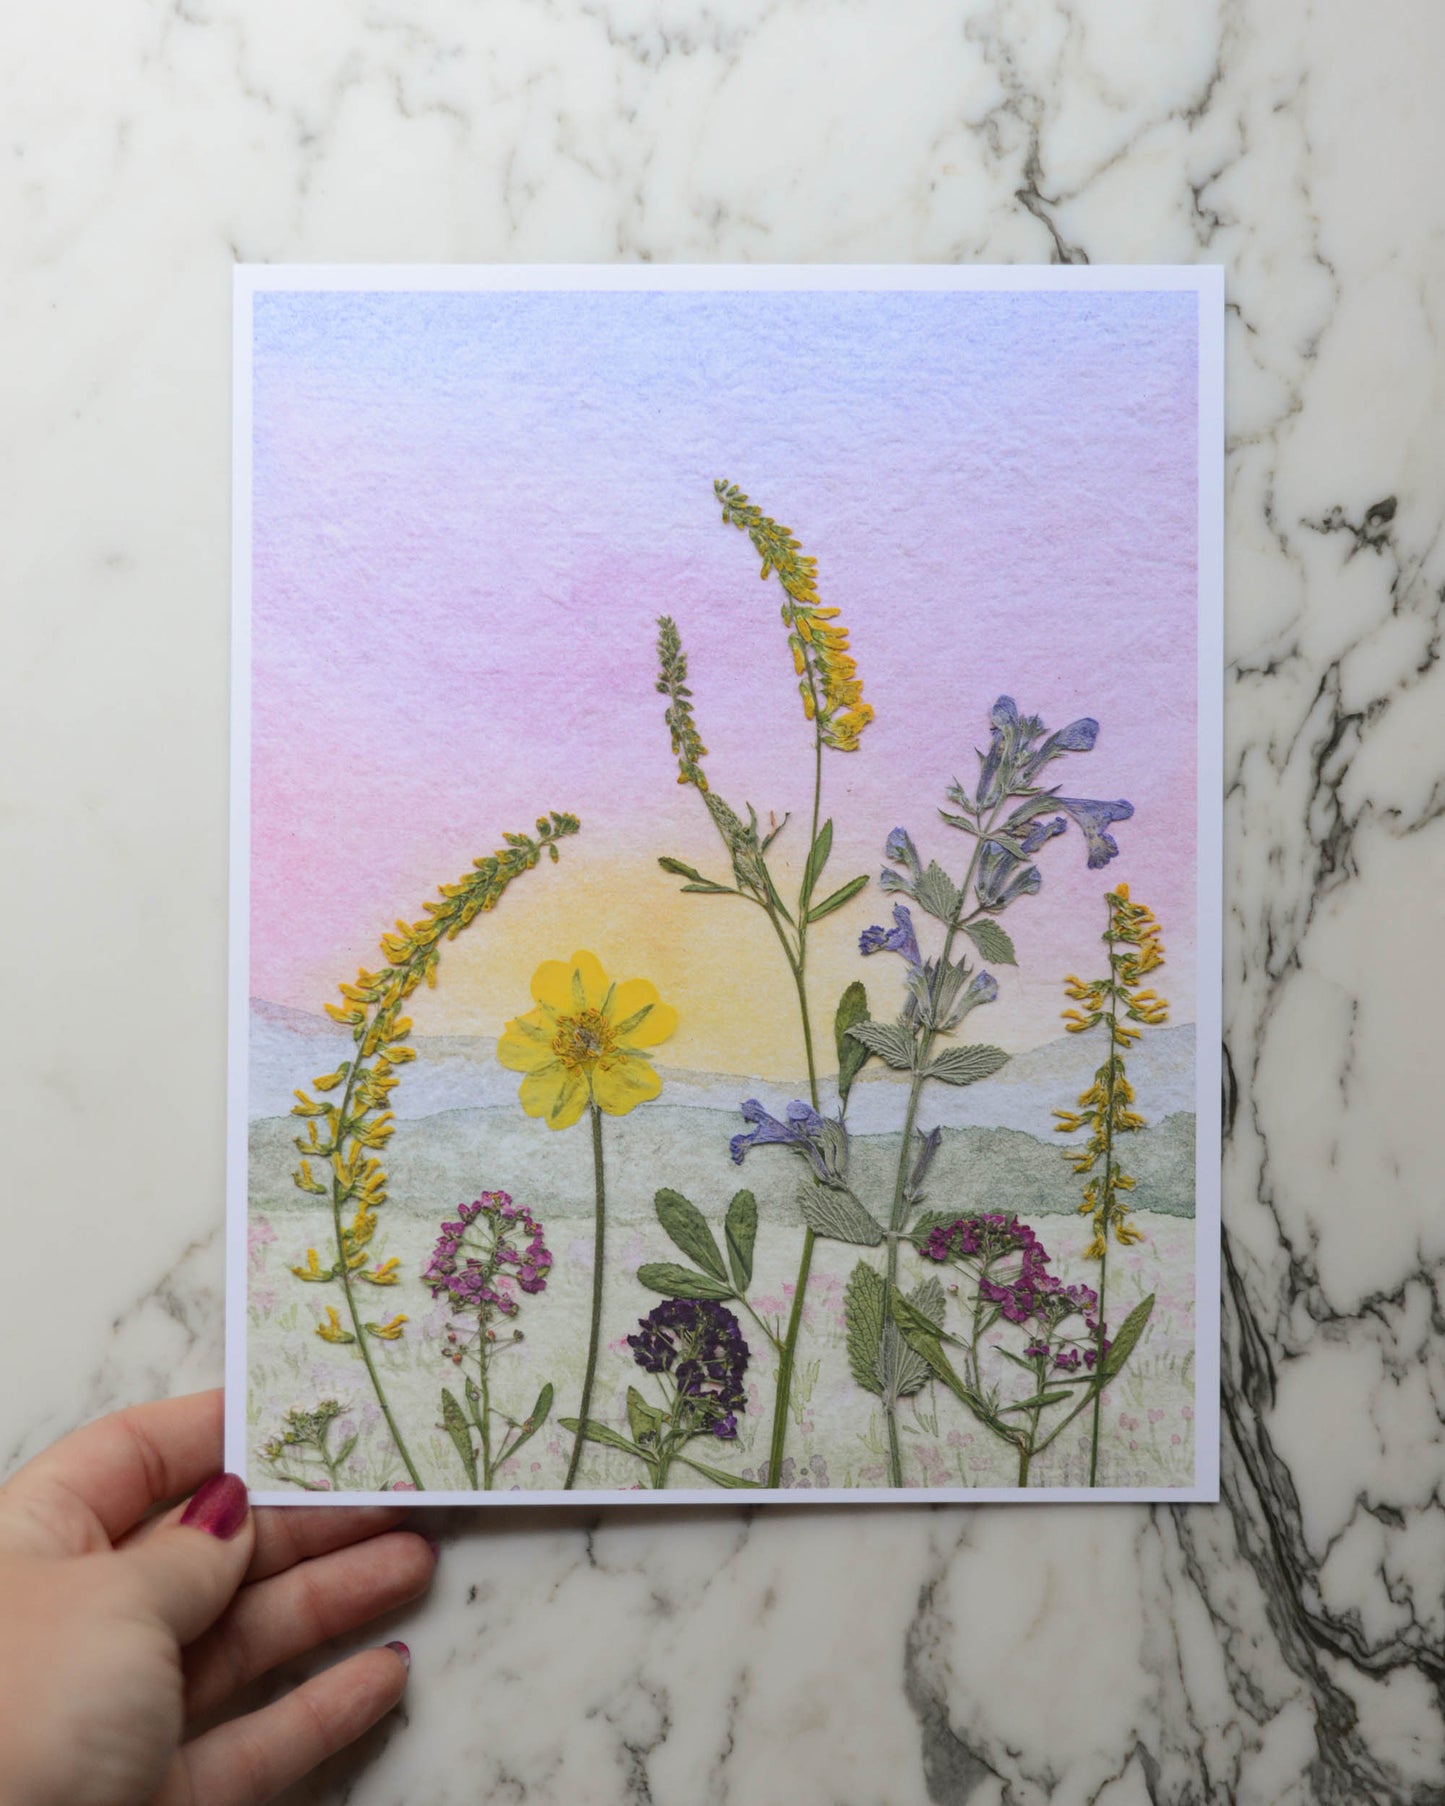 Foothills Sunrise - Watercolor Flowerscape Print artwork